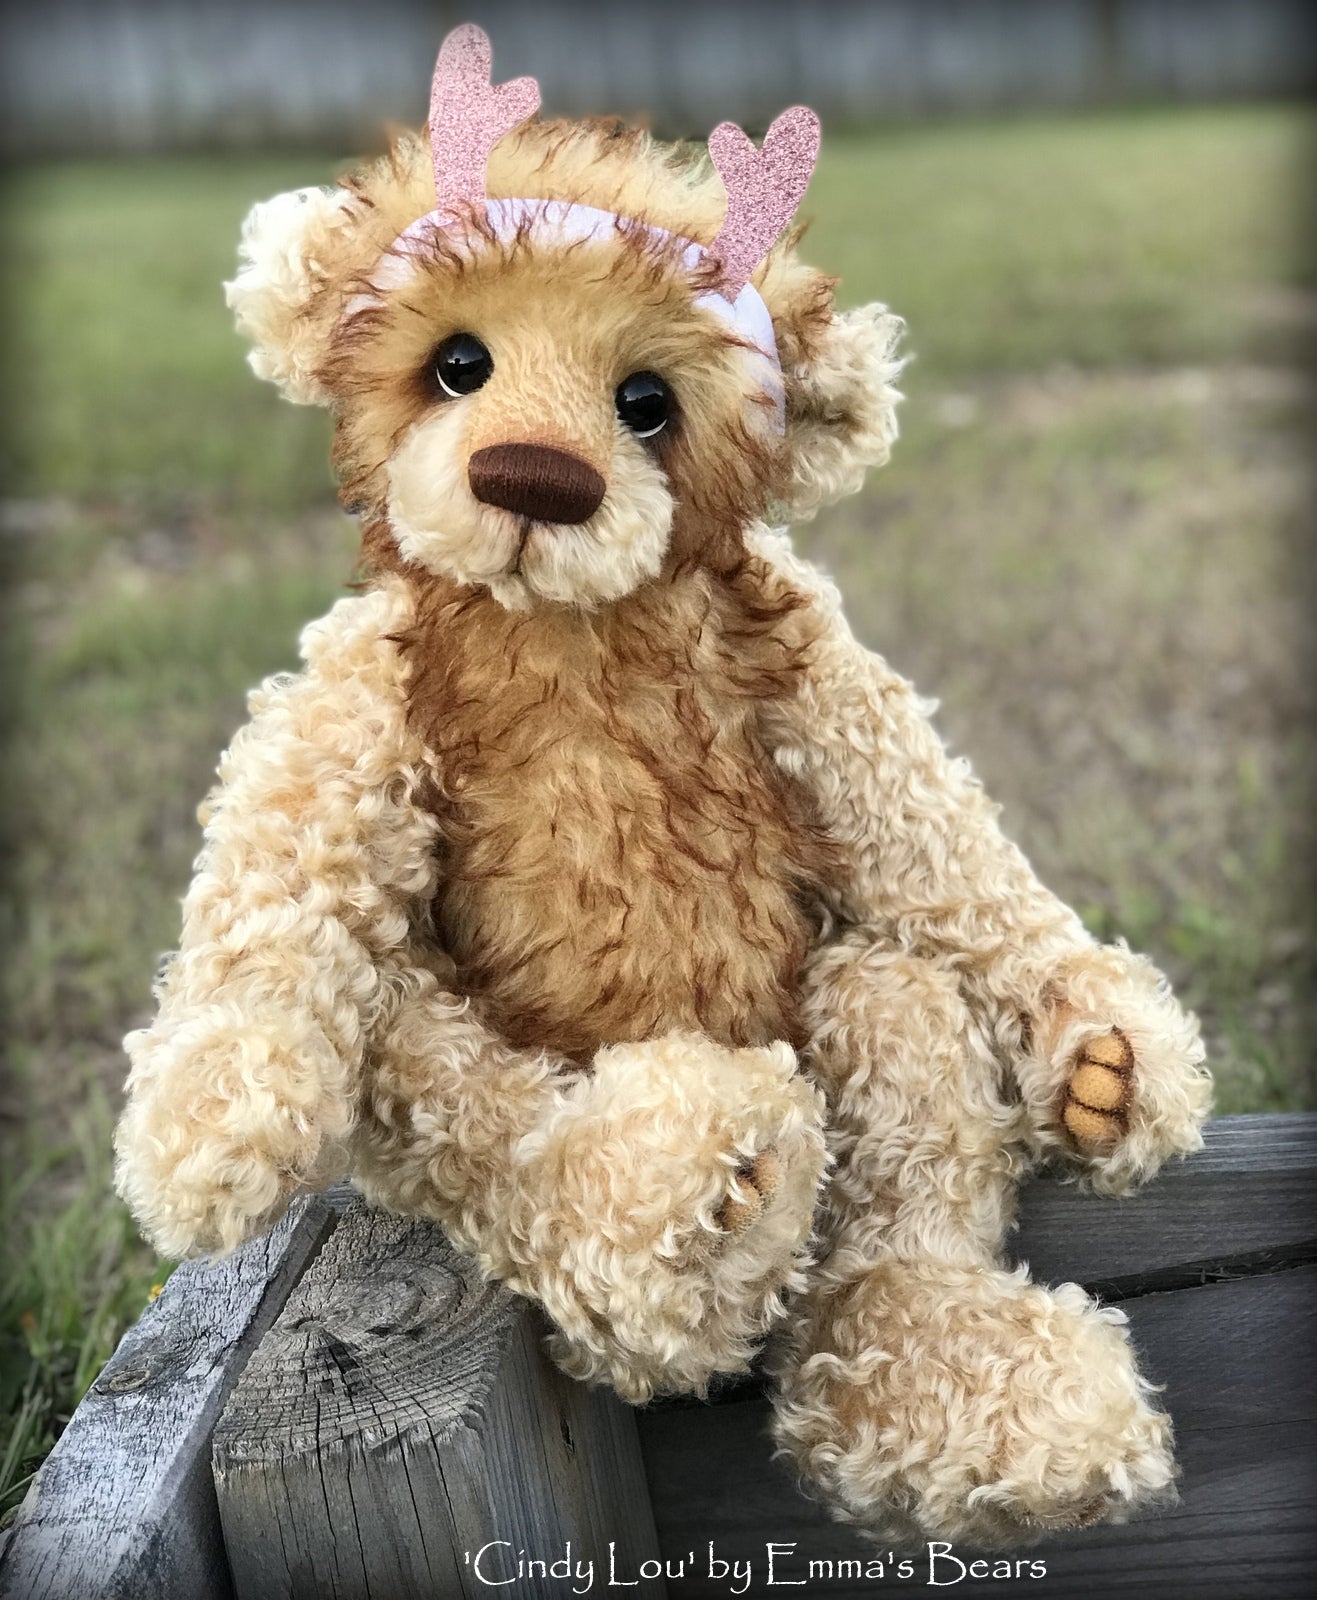 Cindy Lou - 21" Christmas 2018 Toddler Artist Bear by Emma's Bears - OOAK